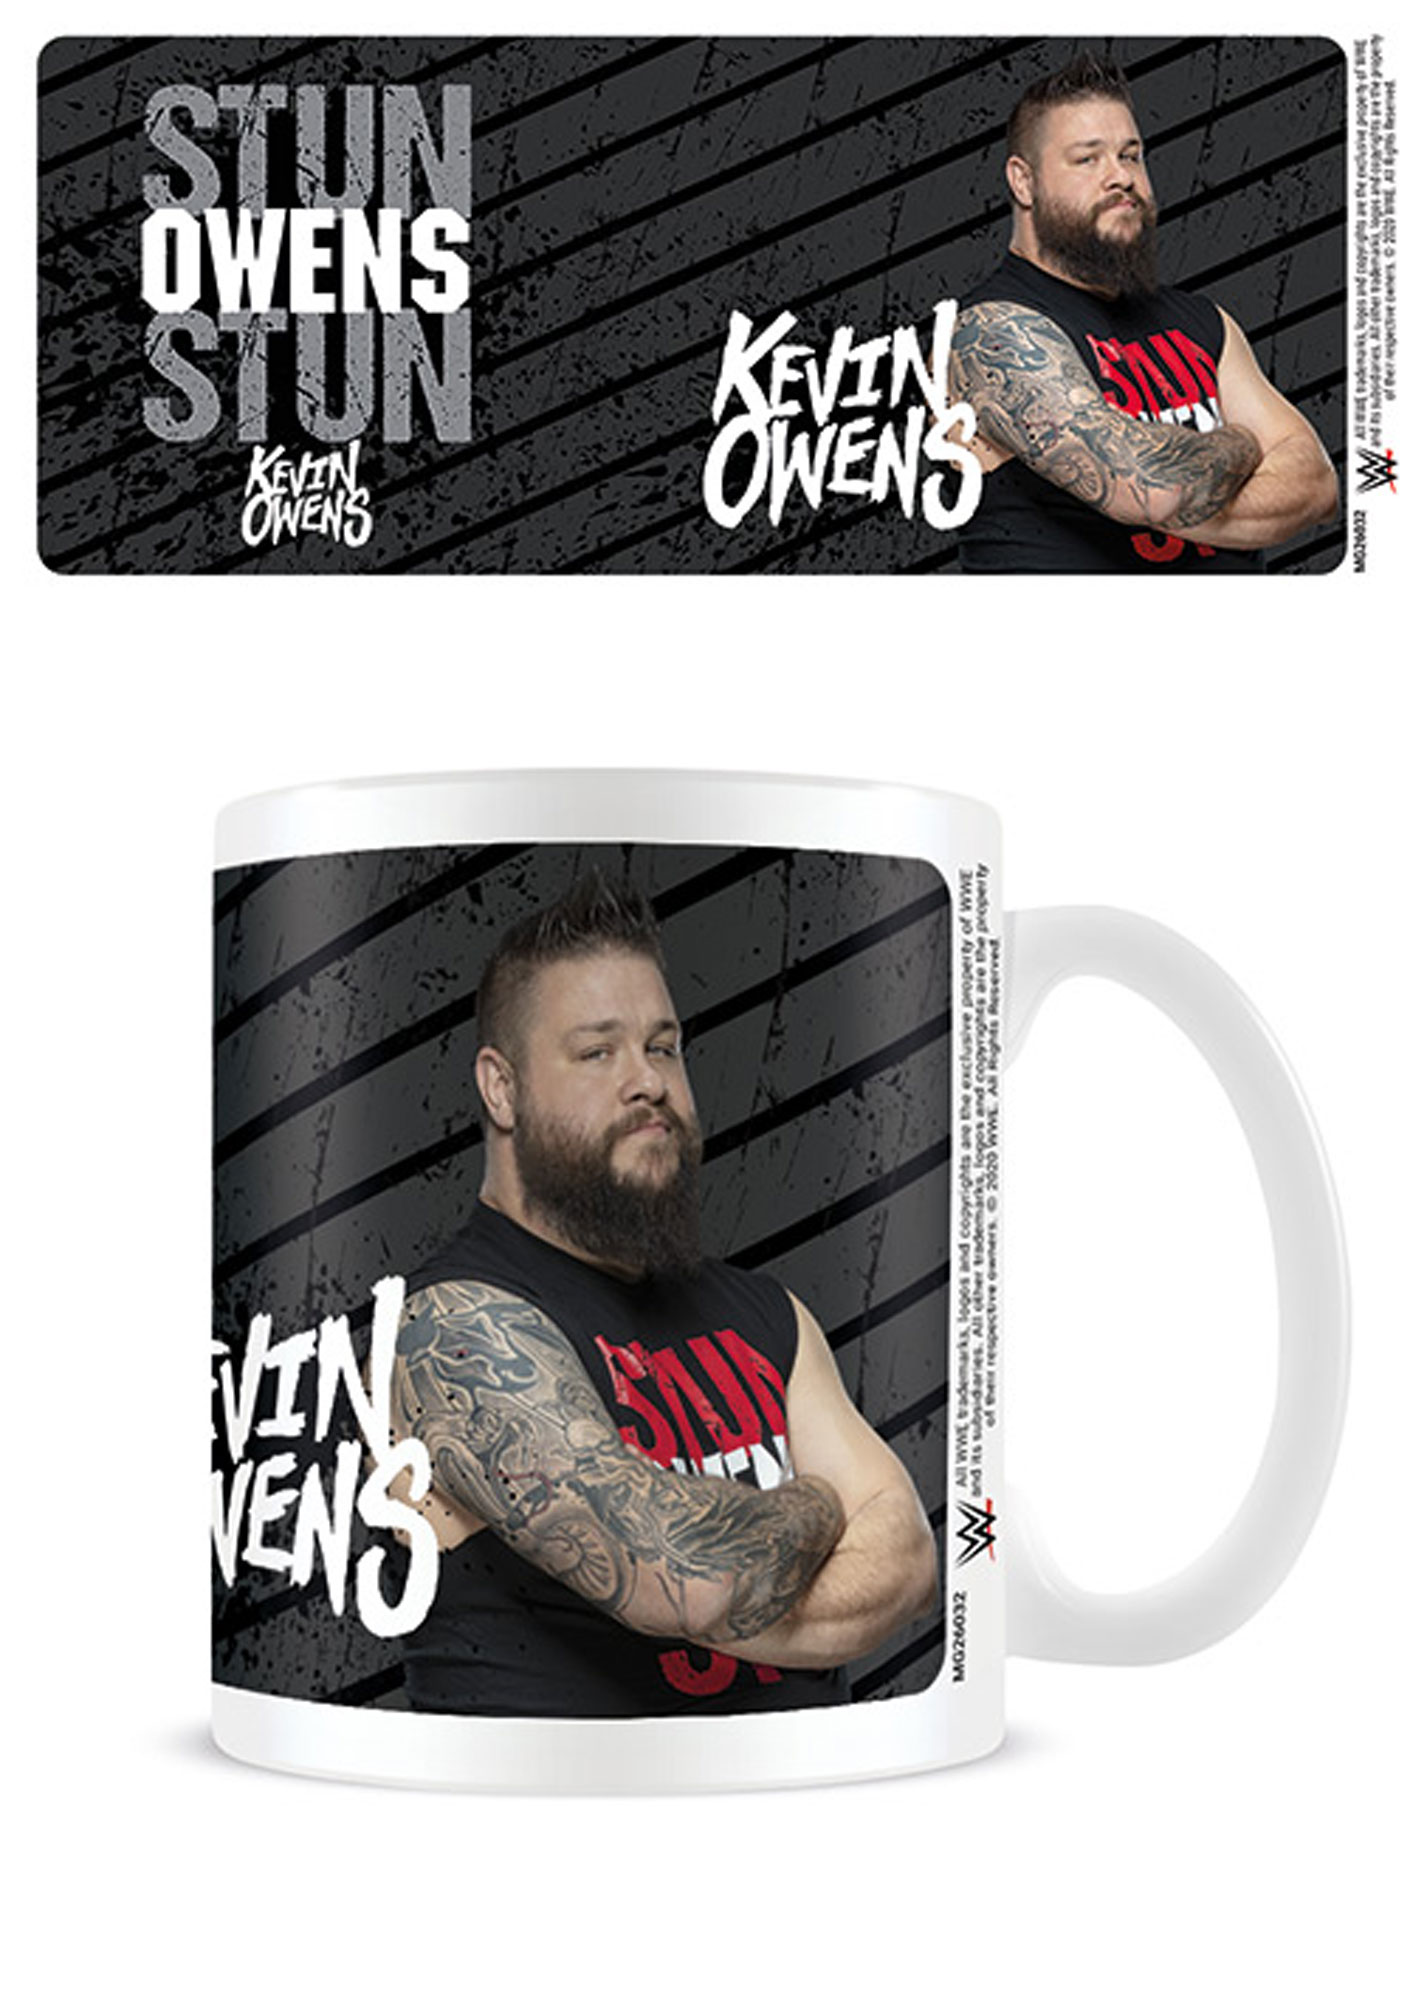 Kevin WWE Stun Owens - - Stun Owens